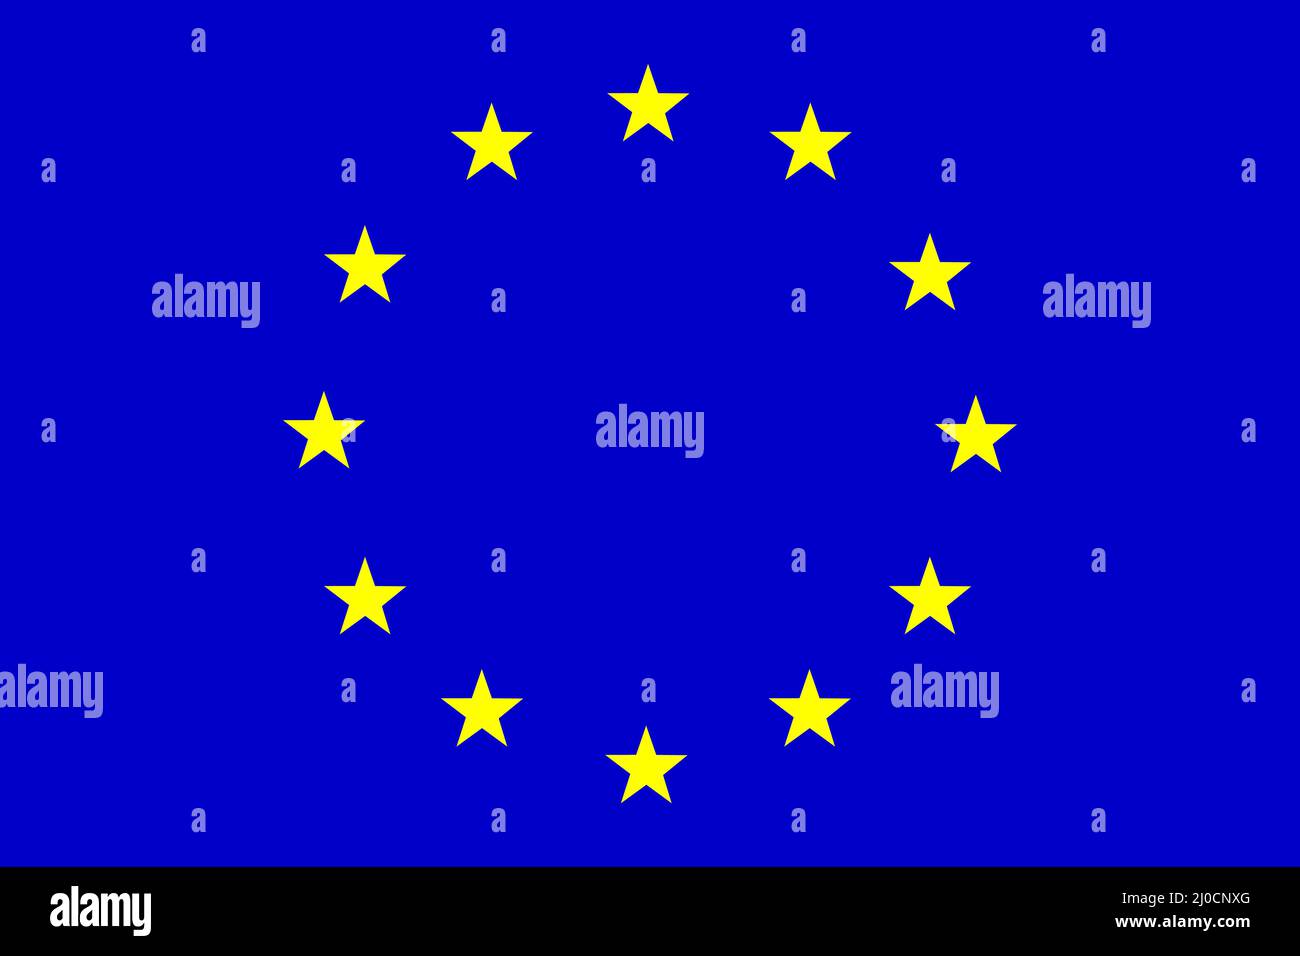 European Union. Flag of European Union. llustration of the flag of European Union. Horizontal design. Abstract design. Illustration. Map. Stock Photo